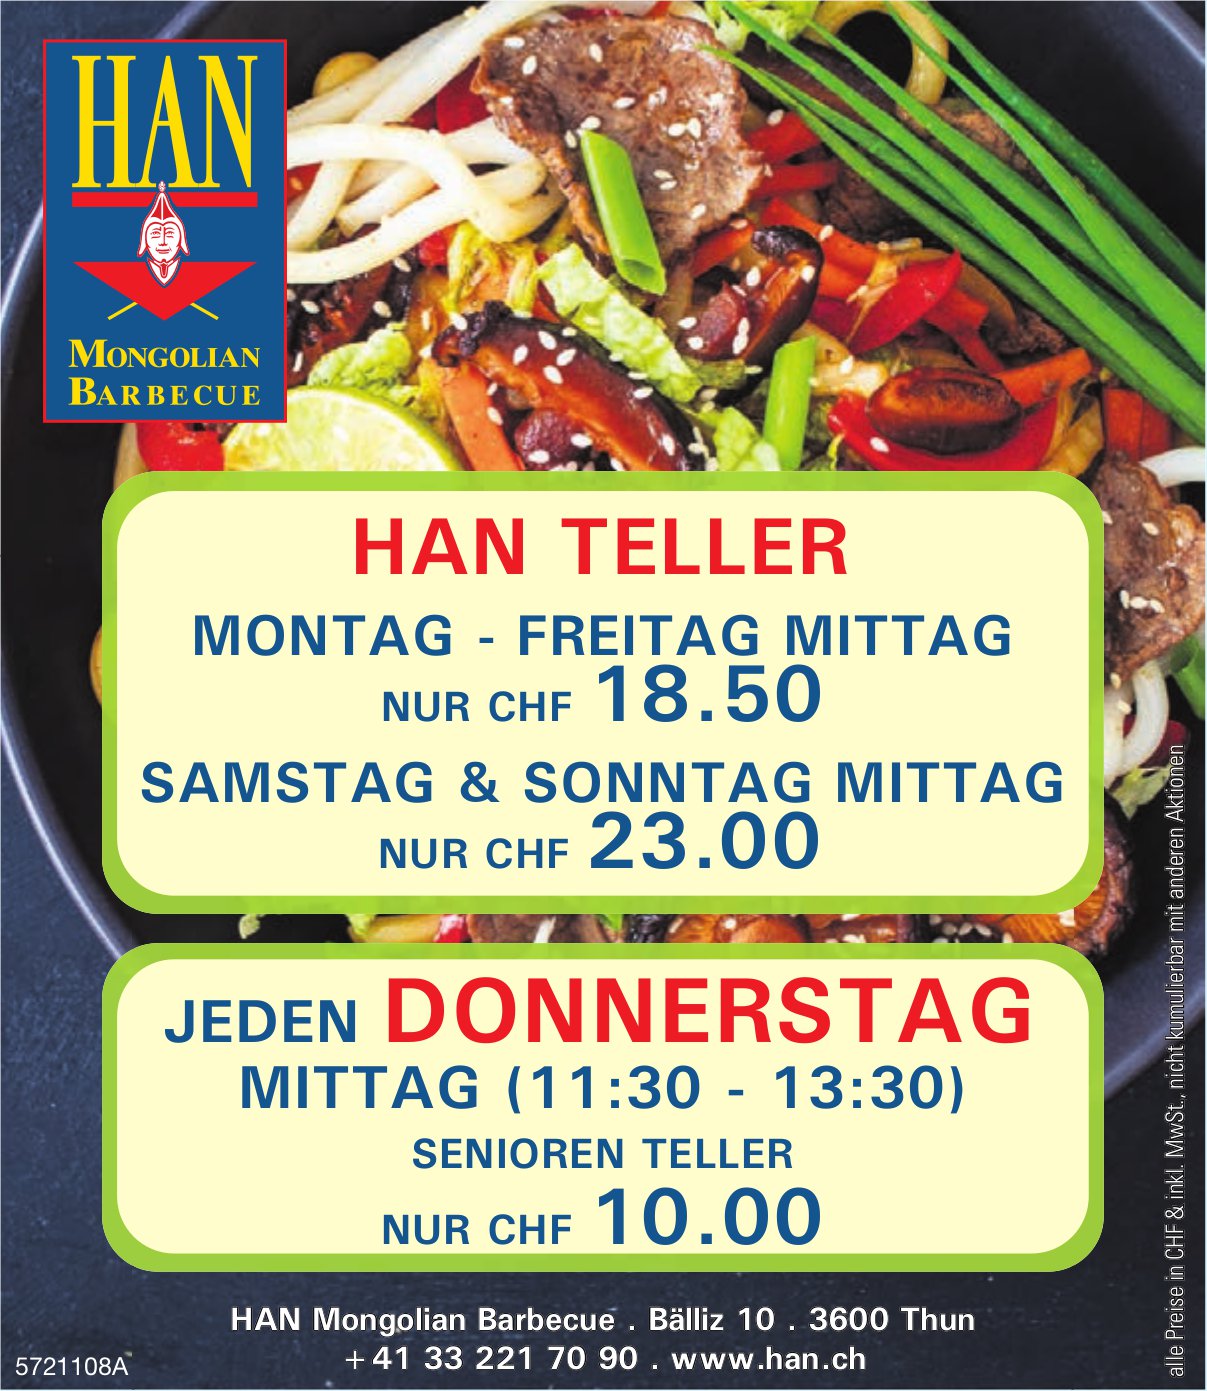 HAN Mongolian Barbecue, Thun - Han Teller / Senioren Teller jeden Donnerstag